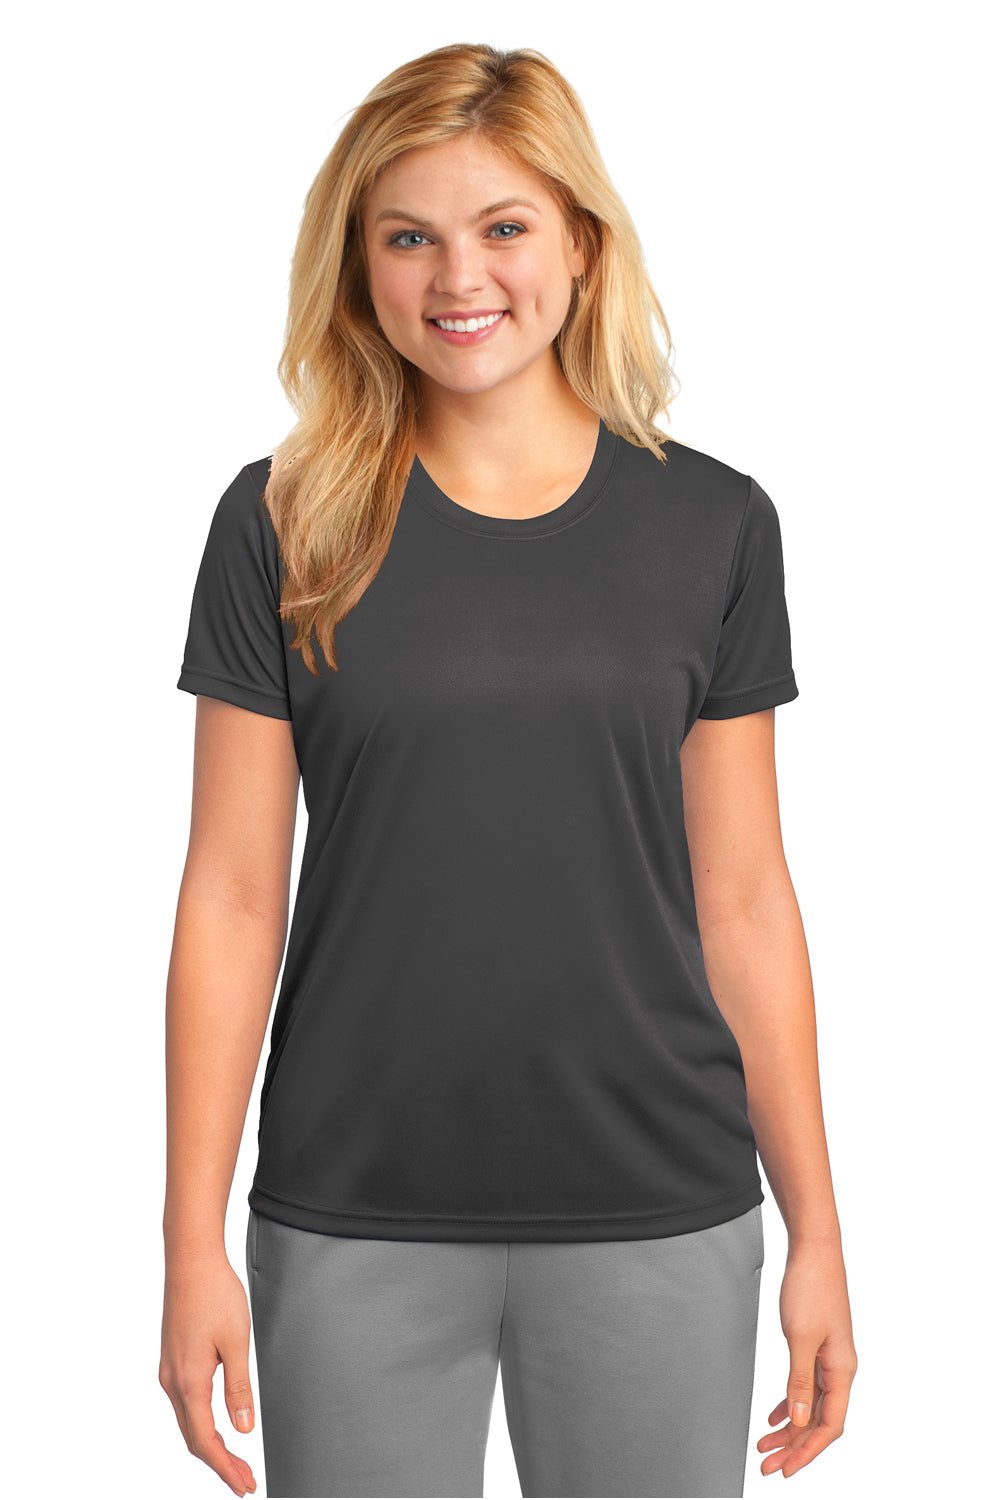 Port & Company LPC380 Womens Dry Zone Performance Moisture Wicking Short Sleeve Crewneck T-Shirt Charcoal Grey Front